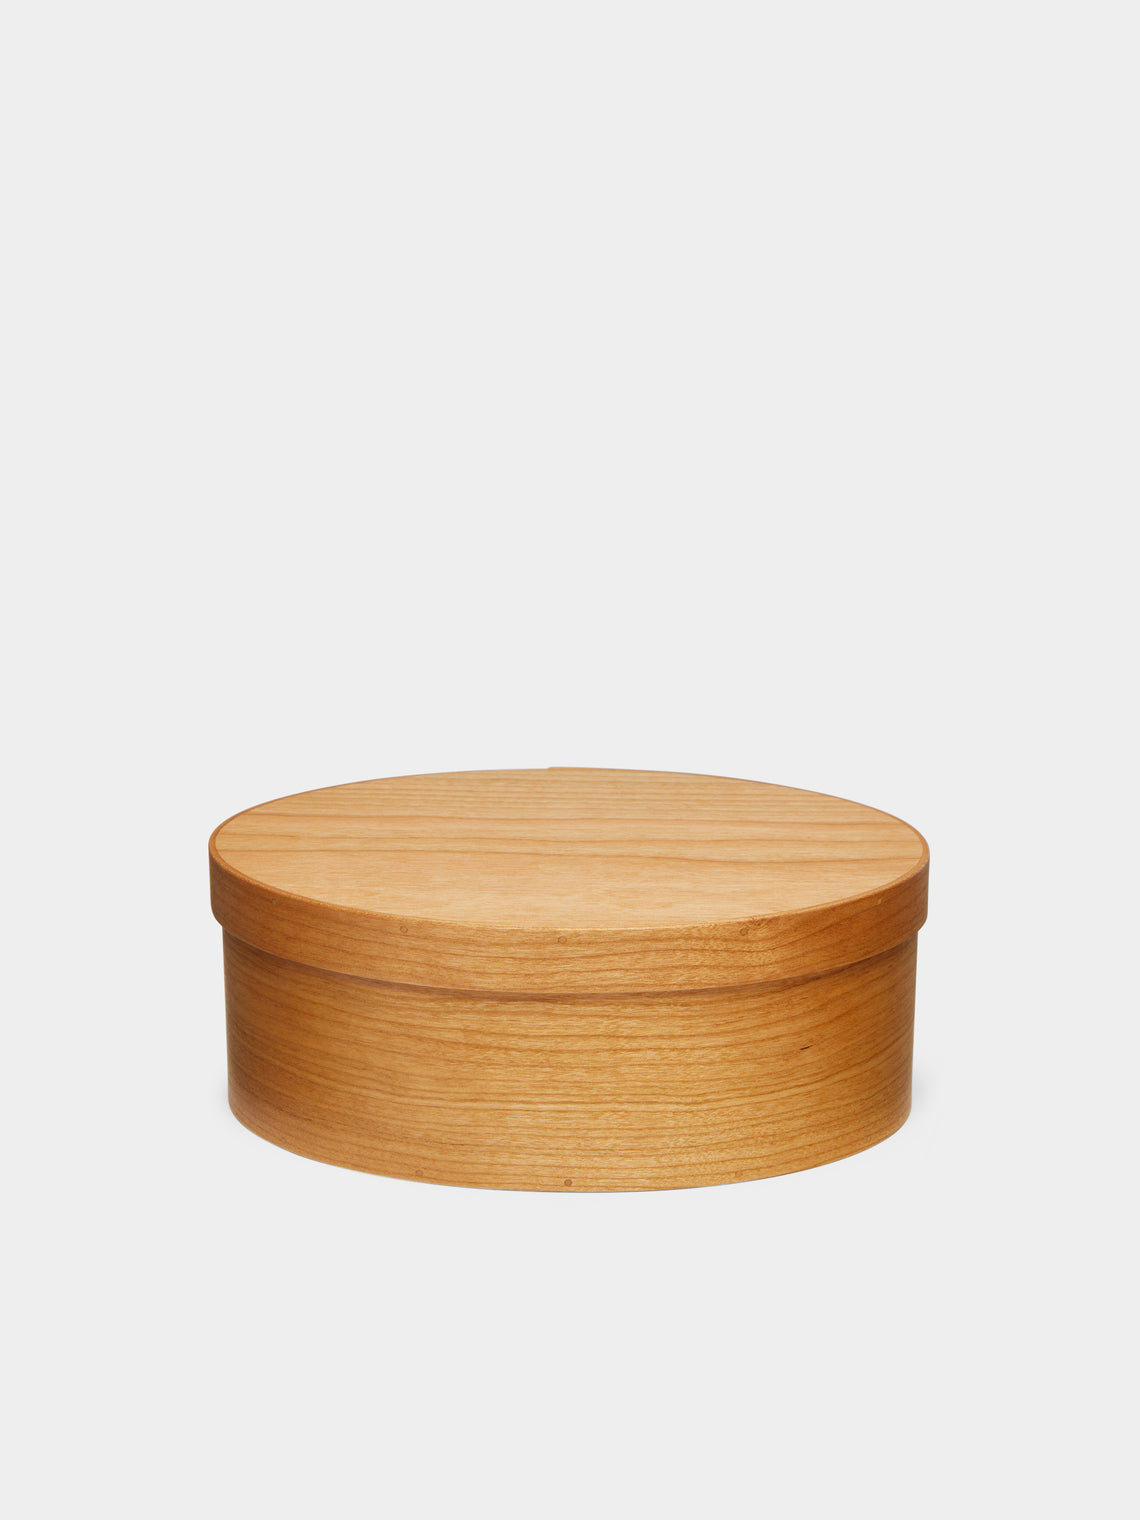 Ifuji - Hand-Carved Maple Wood Small Box -  - ABASK - 